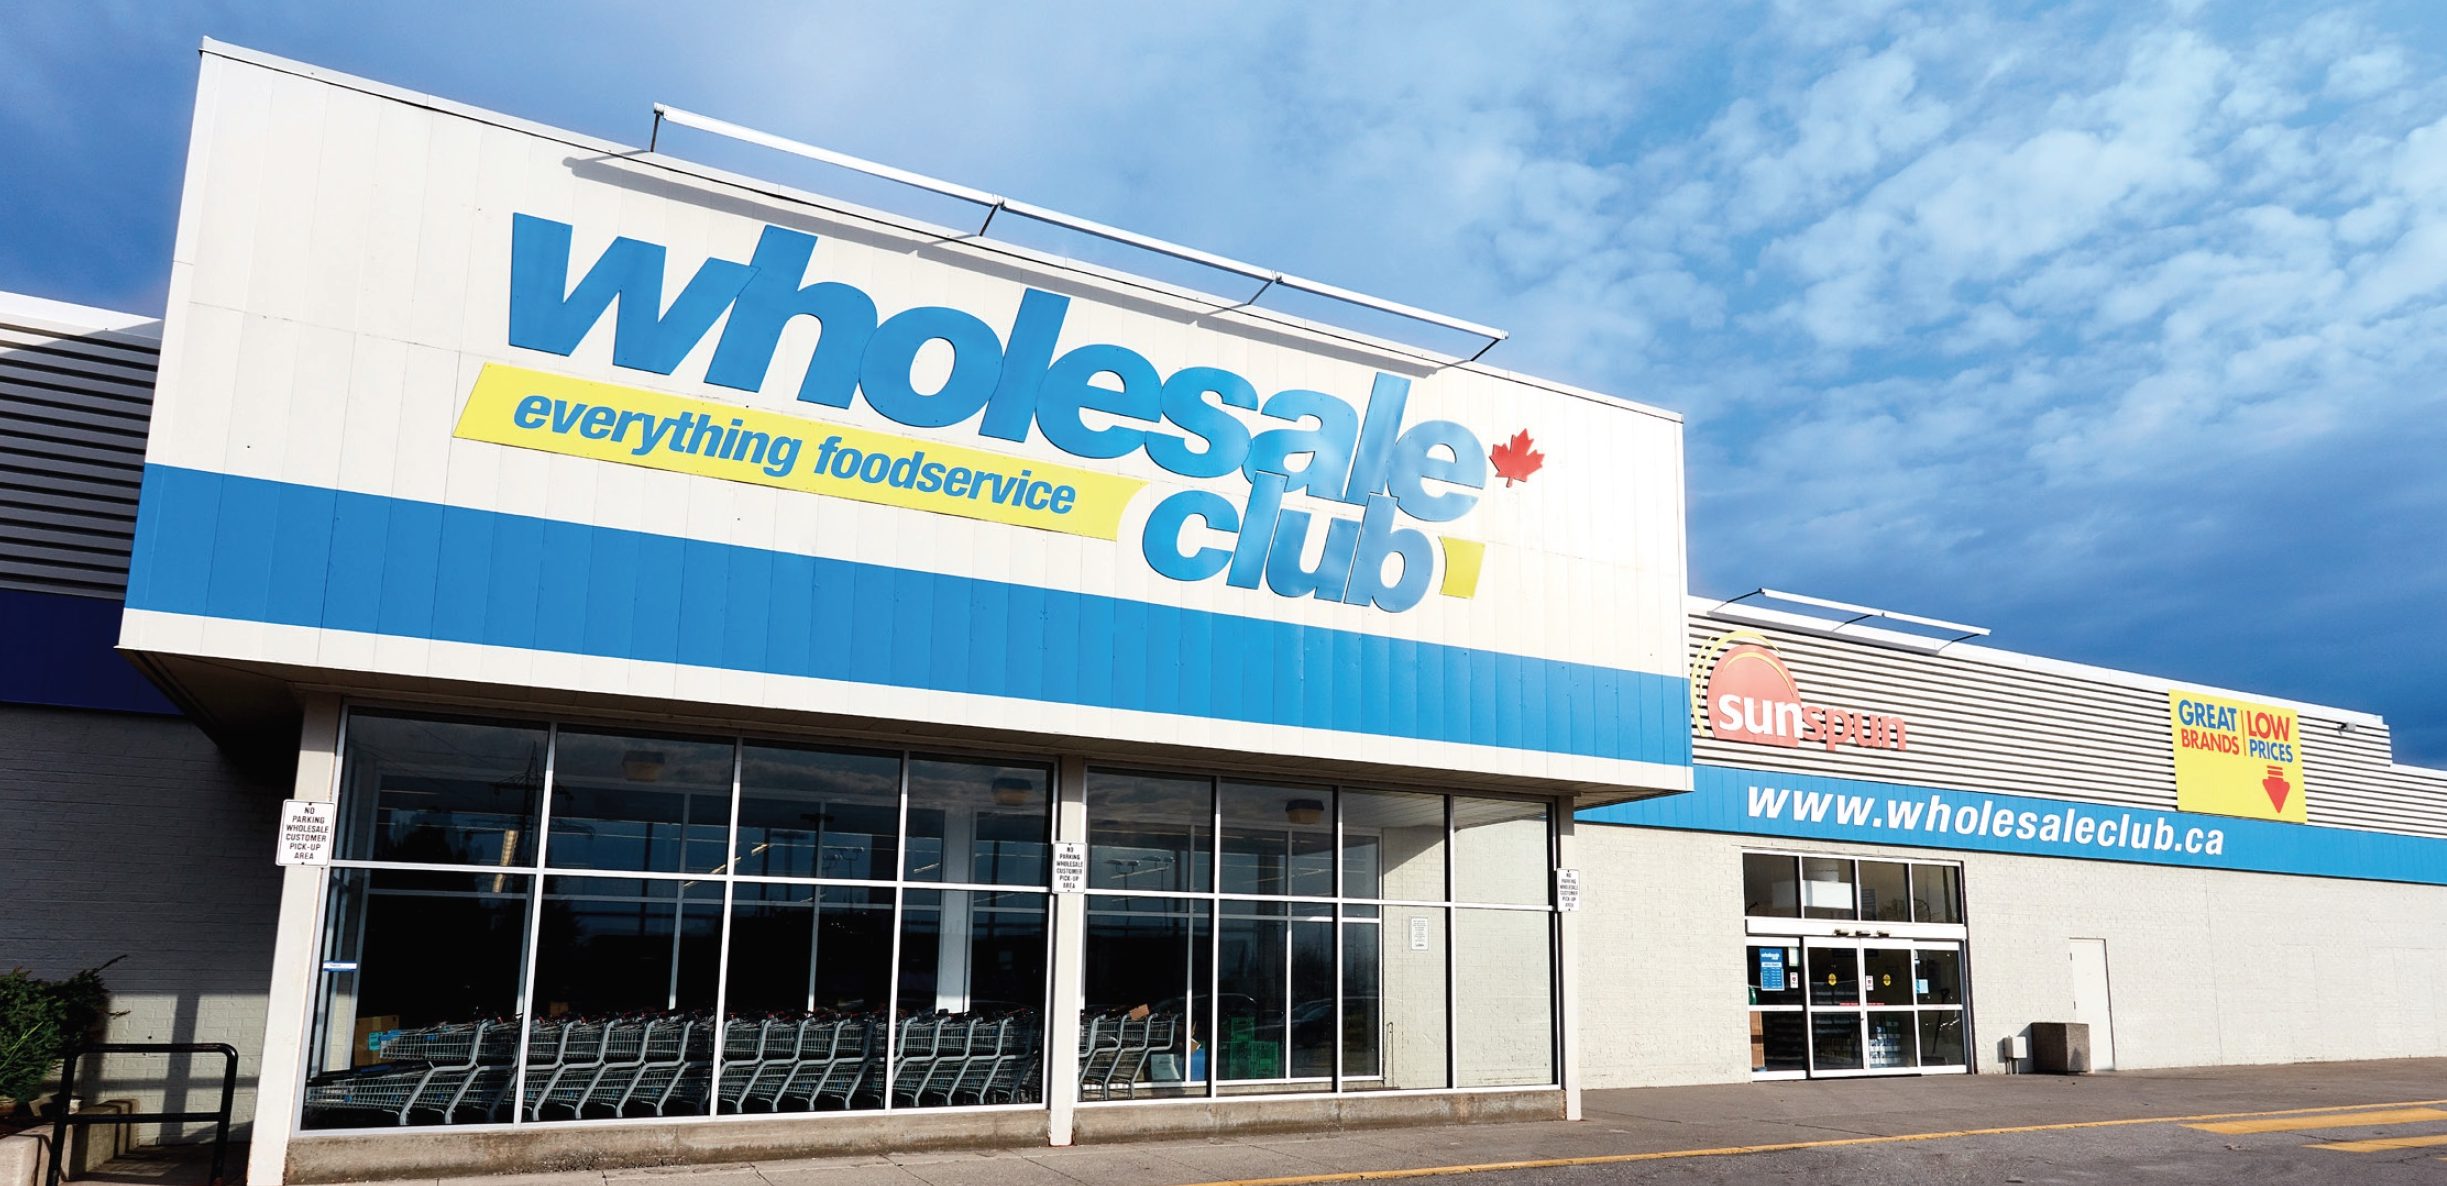 Wholesale Club Store - TI Group Inc.